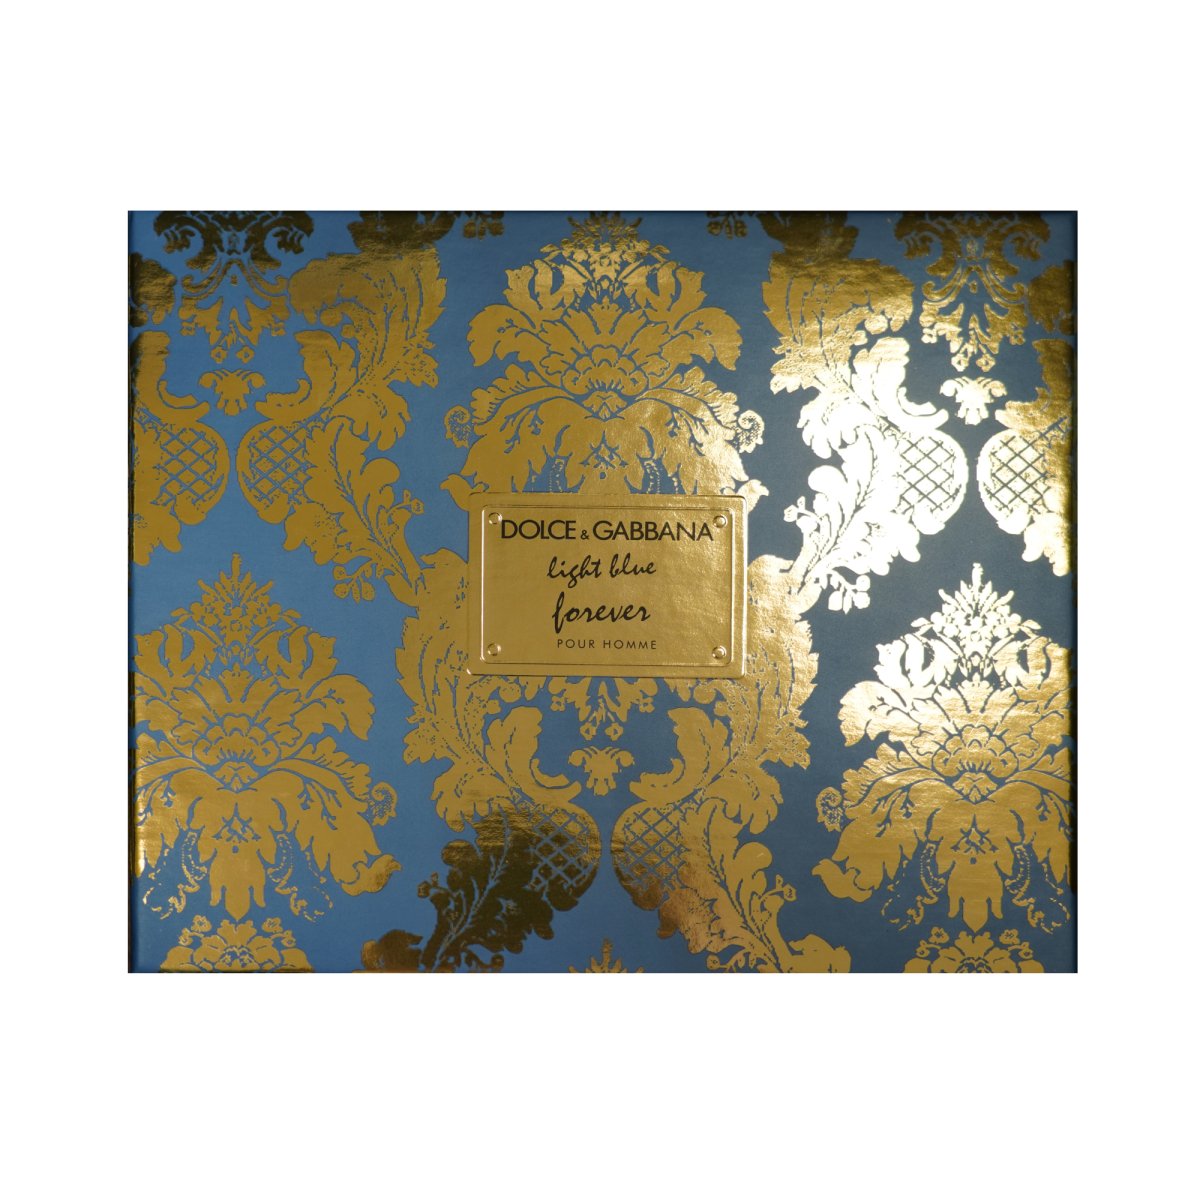 Dolce & Gabbana Light Blue Forever Eau de Parfum Gift Set Box, Perfume Headquarters - Dolce & Gabbana - Gift Set